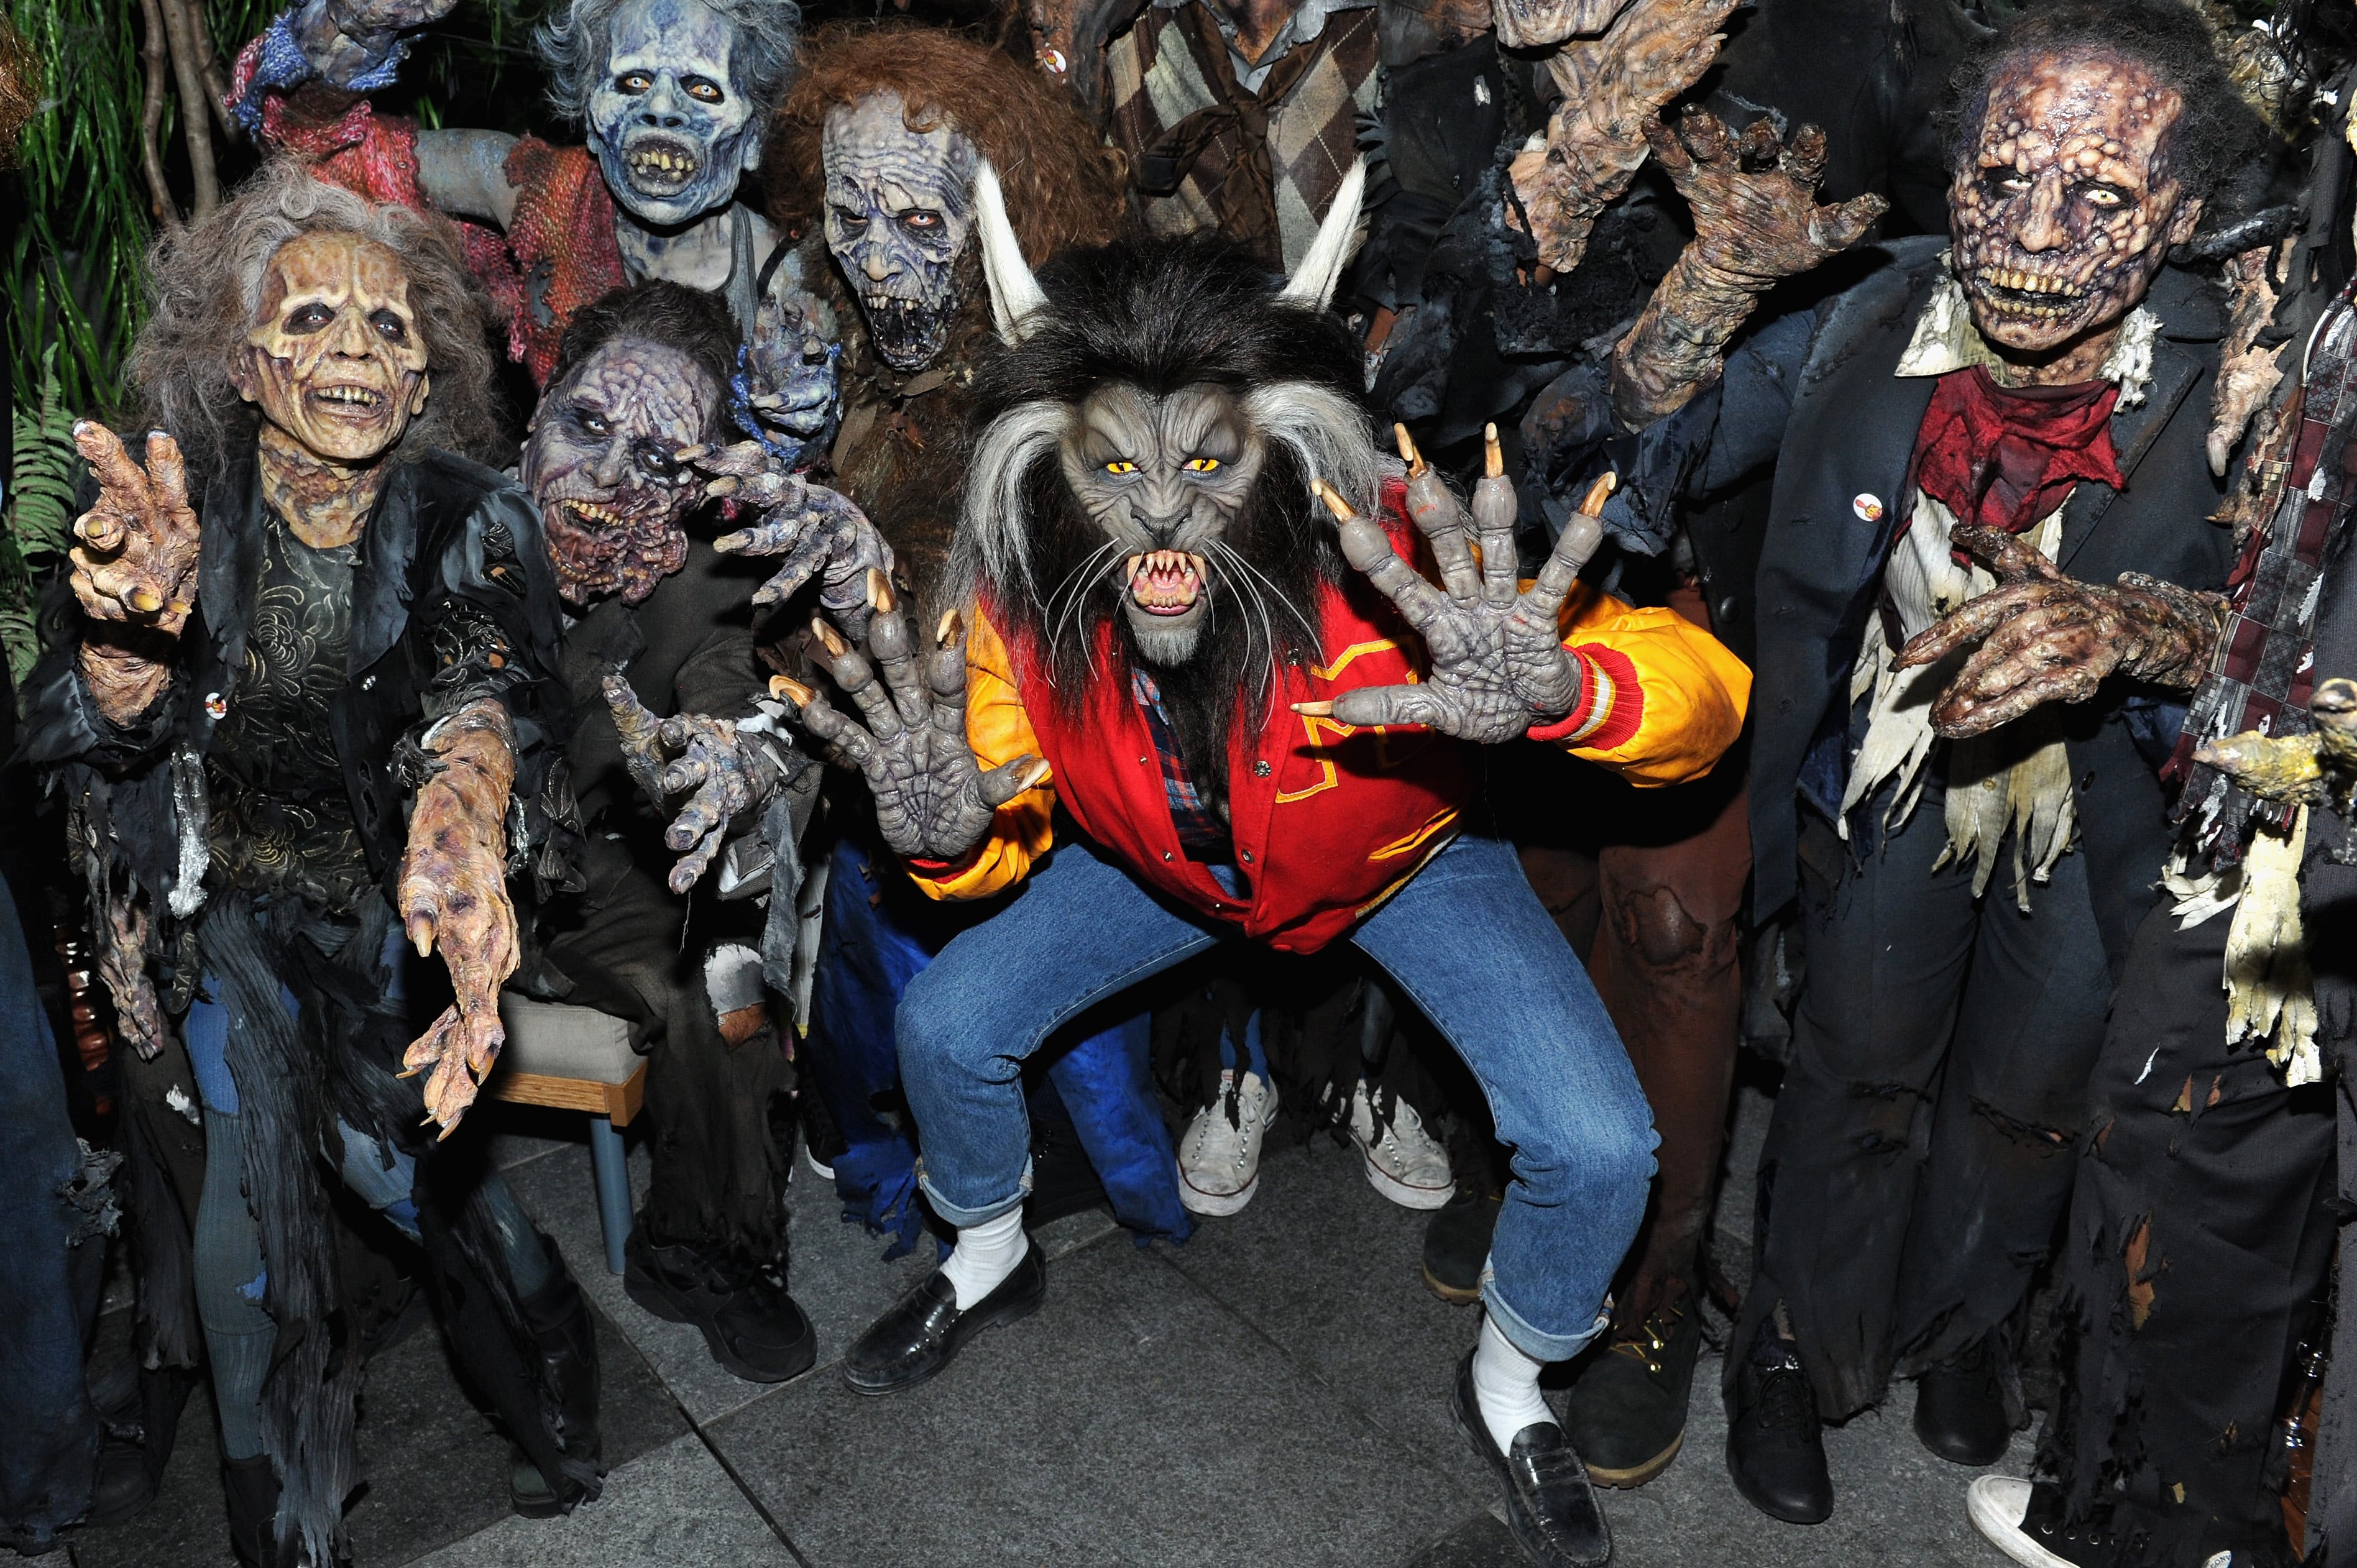 Heidi Klum's Halloween Costume Is an Homage to Michael Jackson